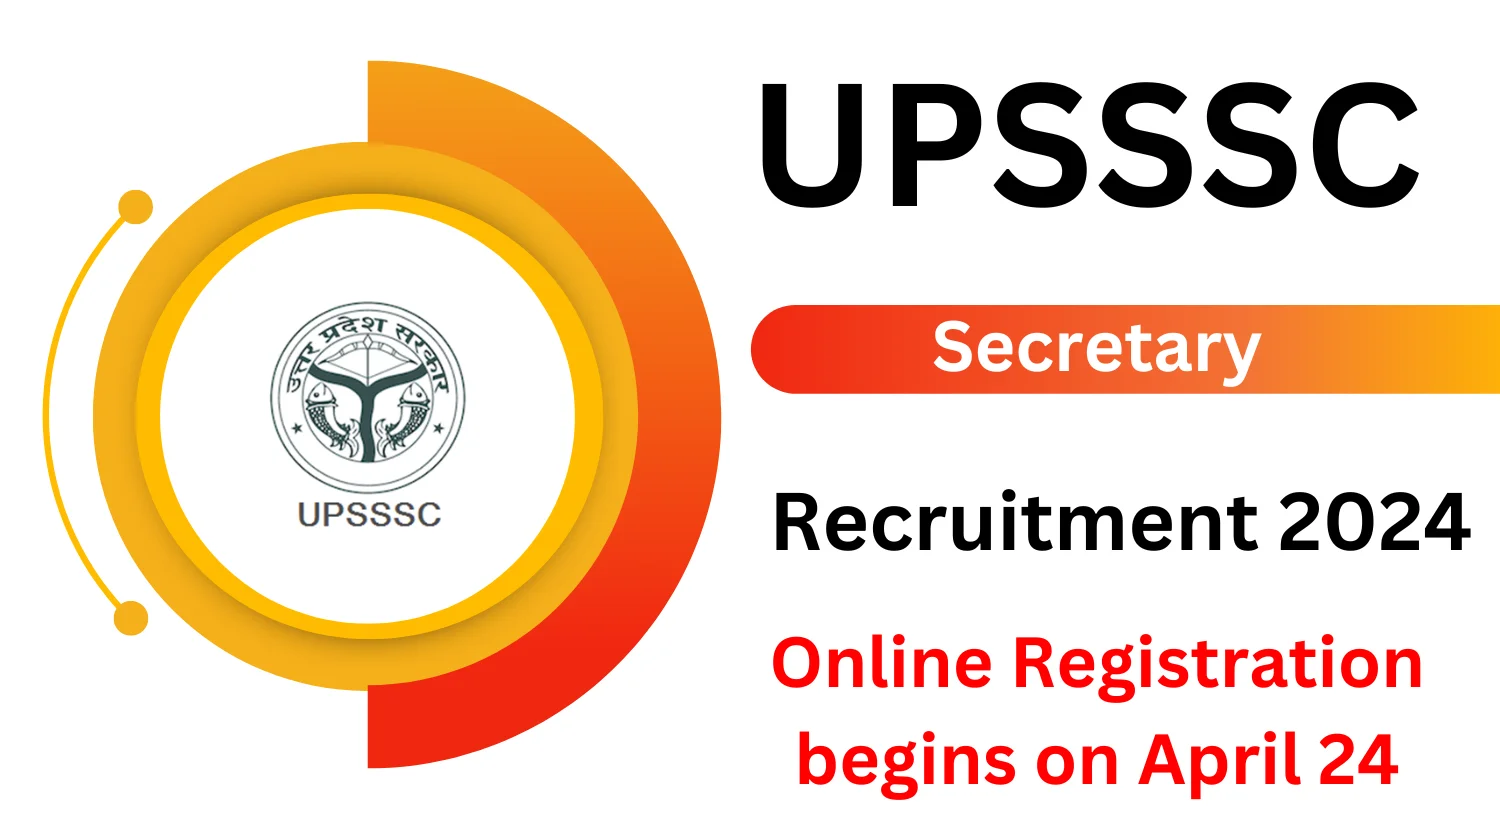 UPSSSC Secretary Recruitment 2024